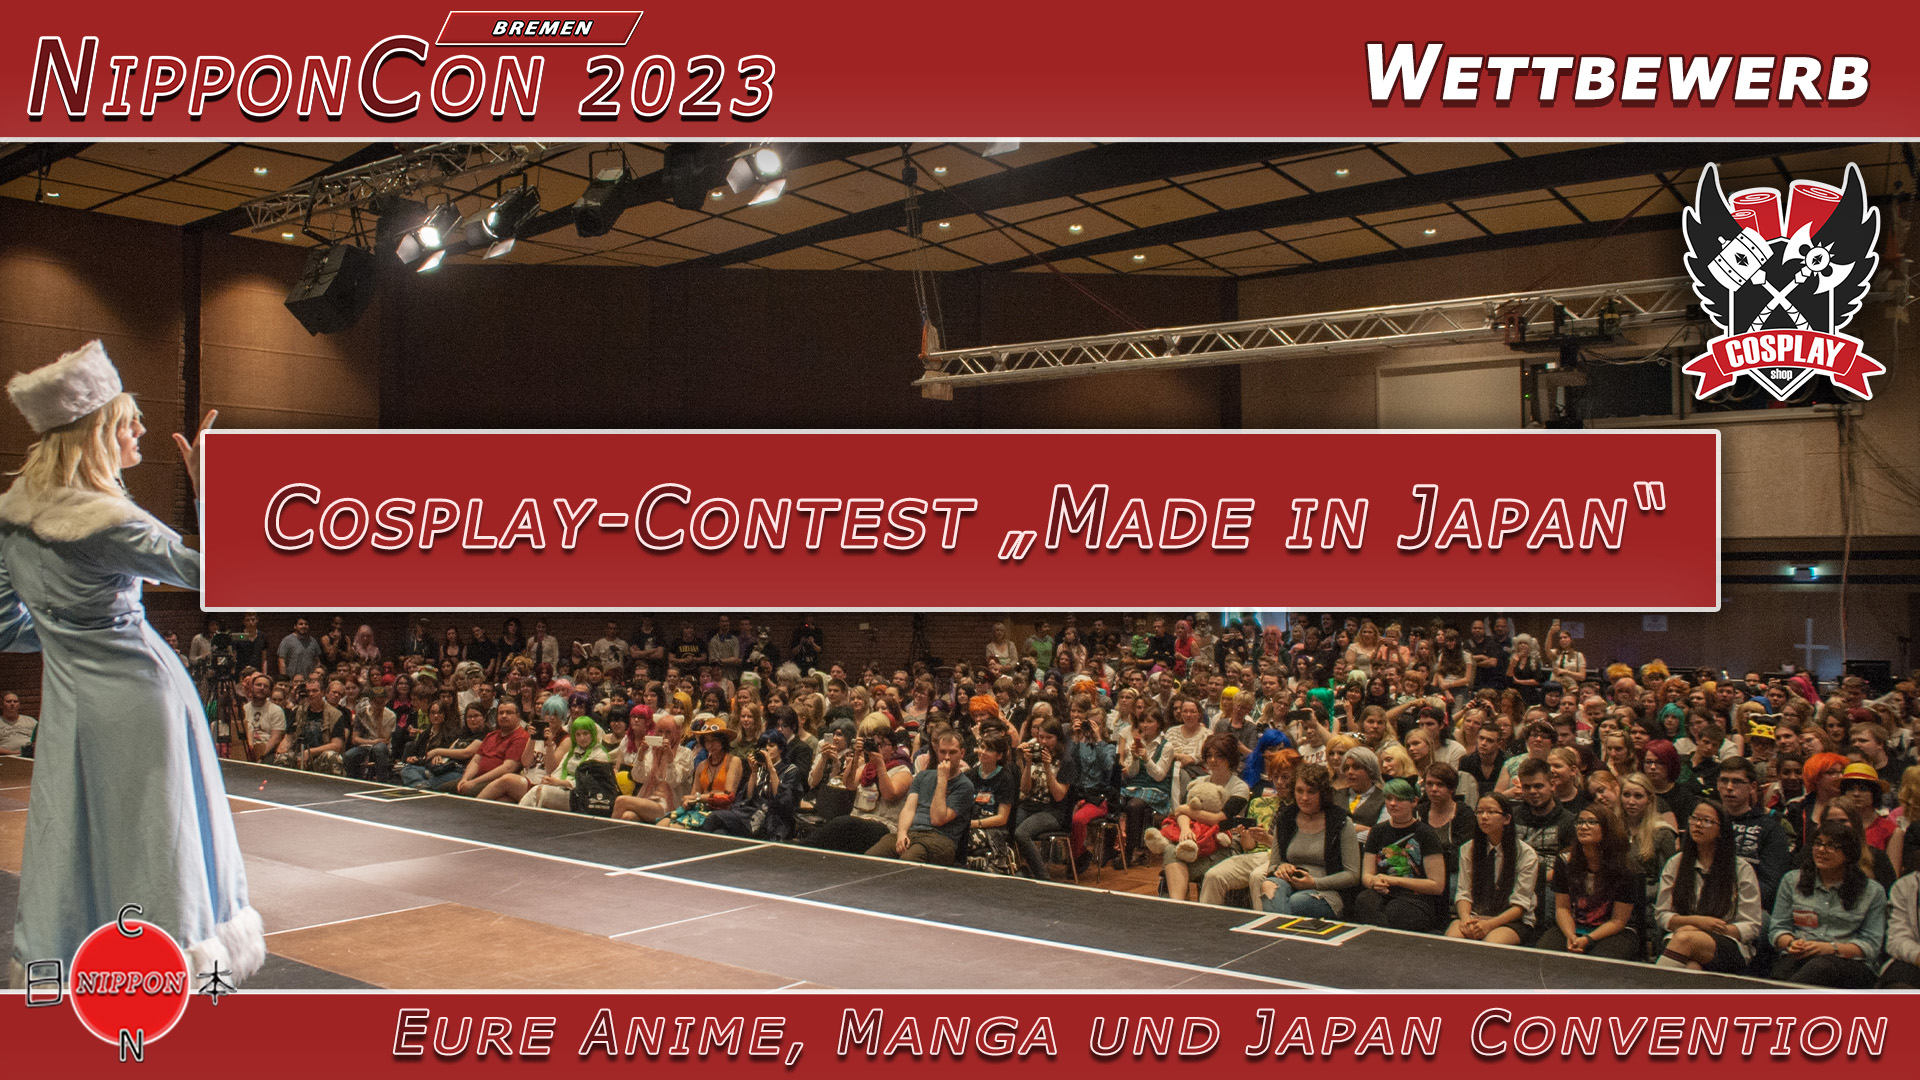 NipponCon 2023 Bremen. Wettbewerb. Cosplay-Contest 